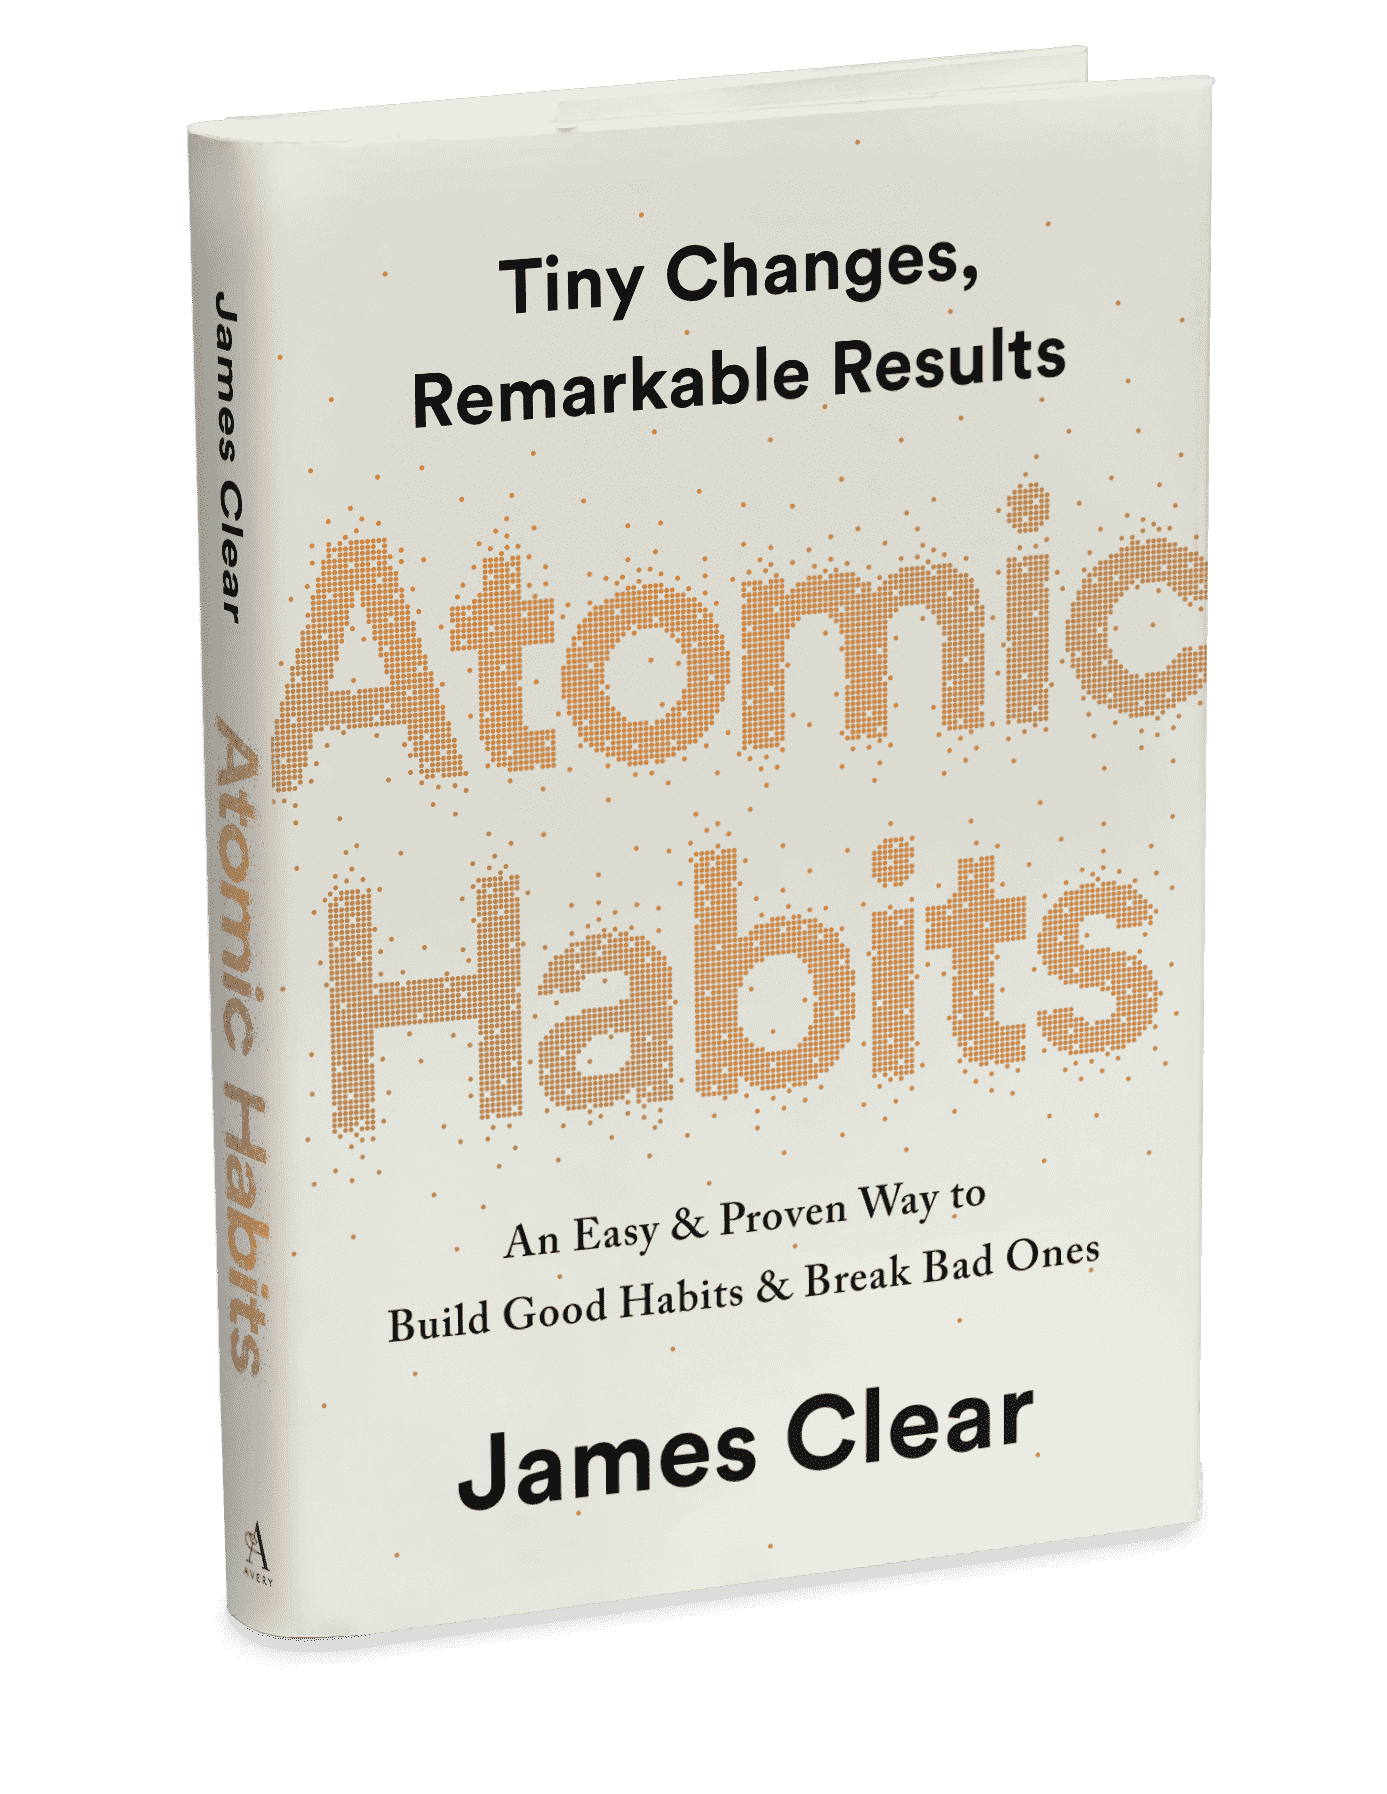 atomic habits book online listen